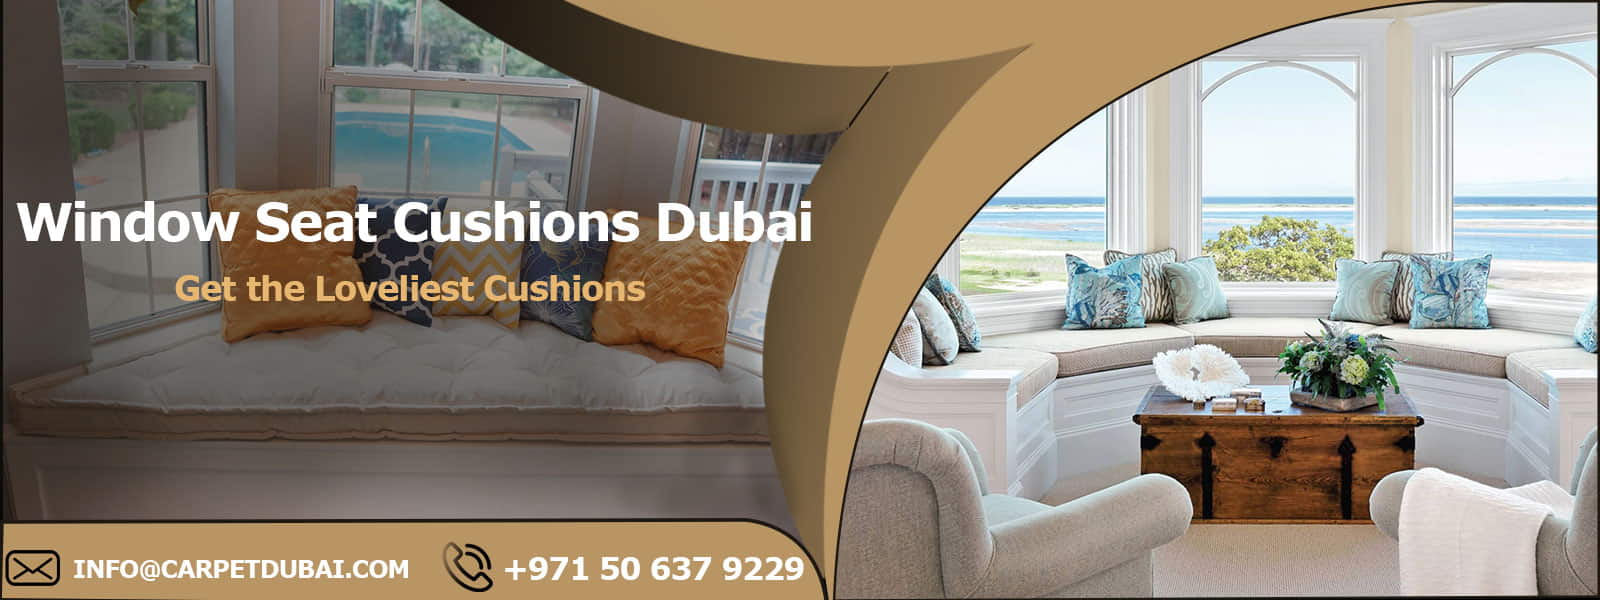 Window-Seat-Cushions Dubai